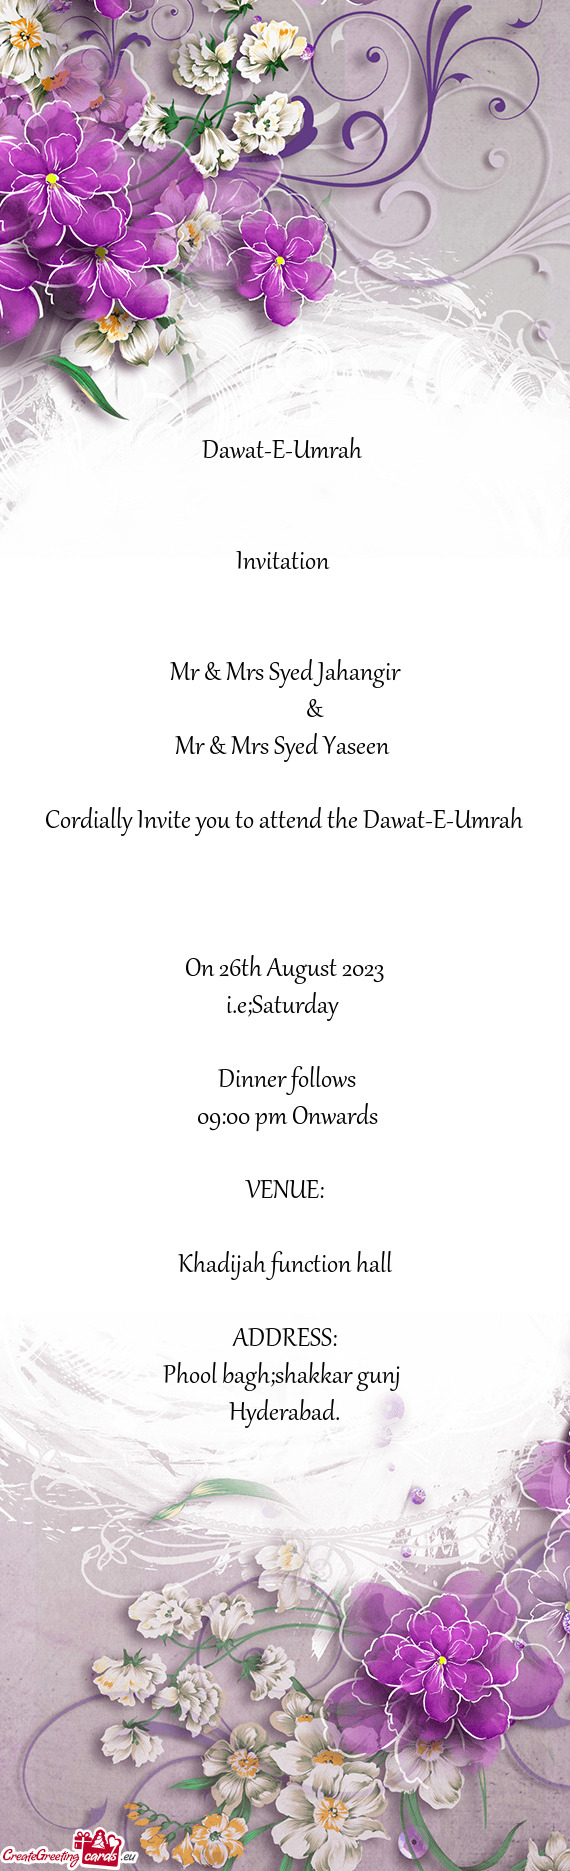 Mr & Mrs Syed Jahangir